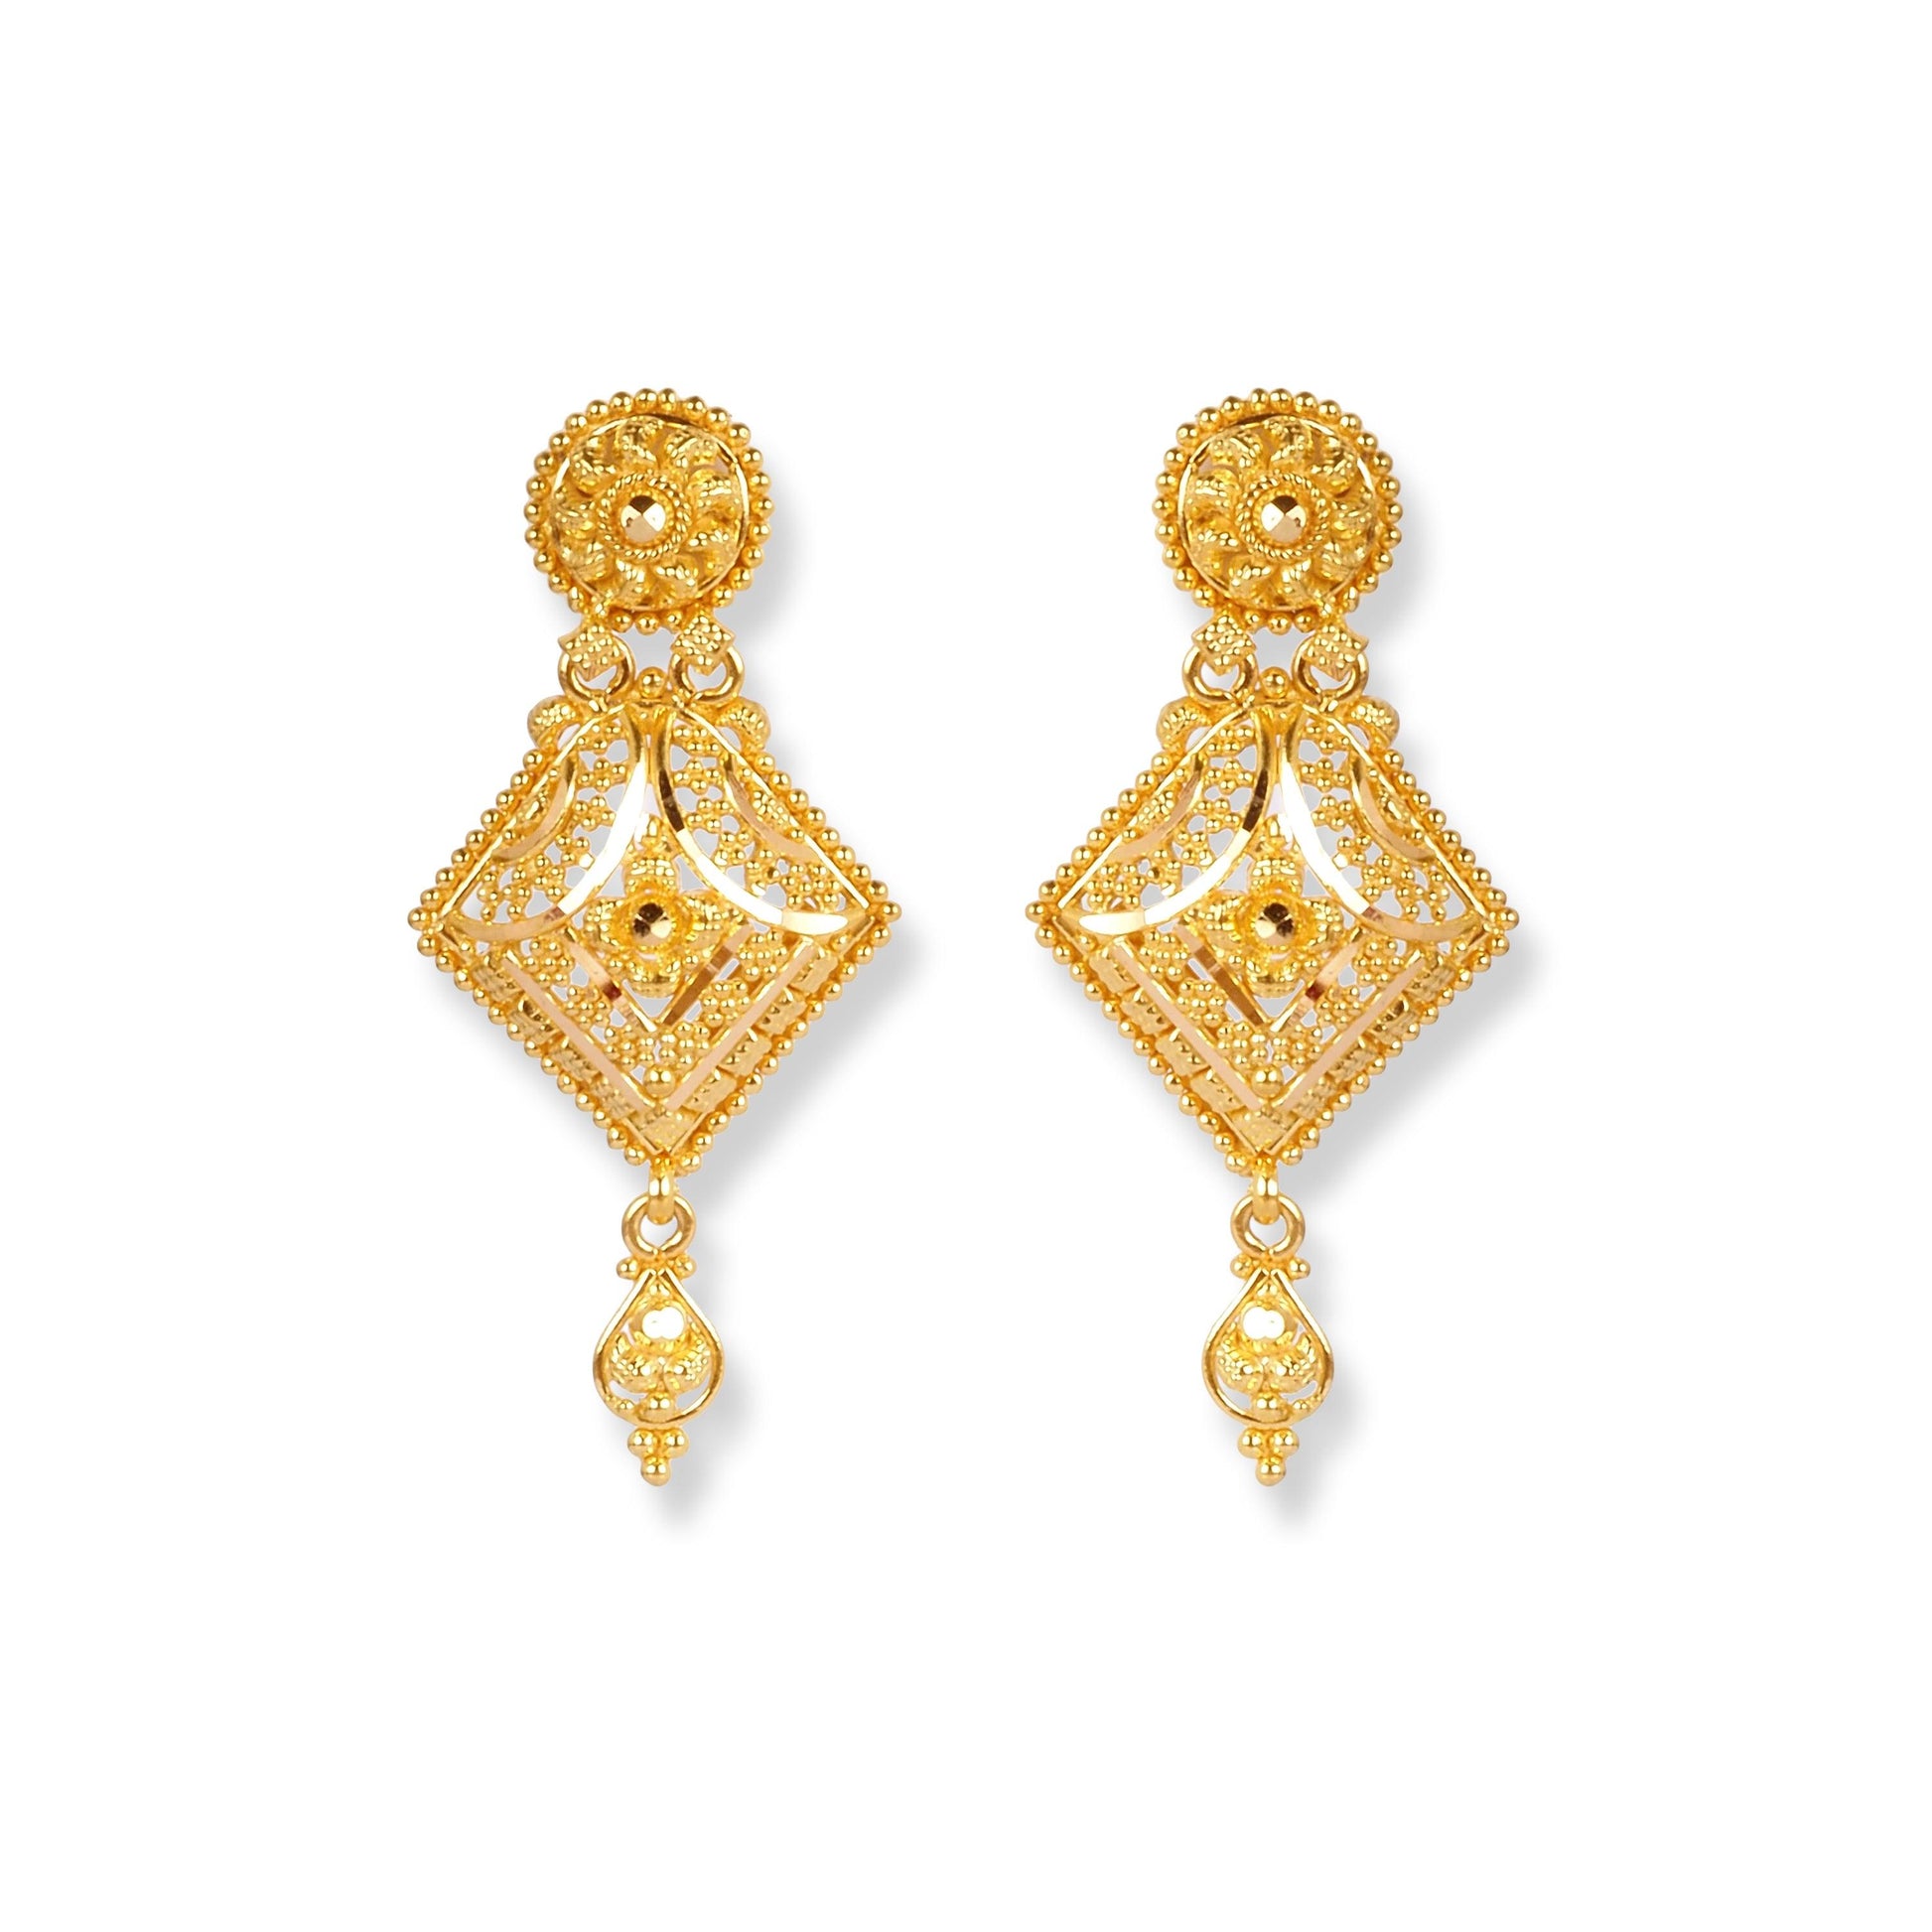 22ct Gold Set with Filigree Work N-7913 - Minar Jewellers